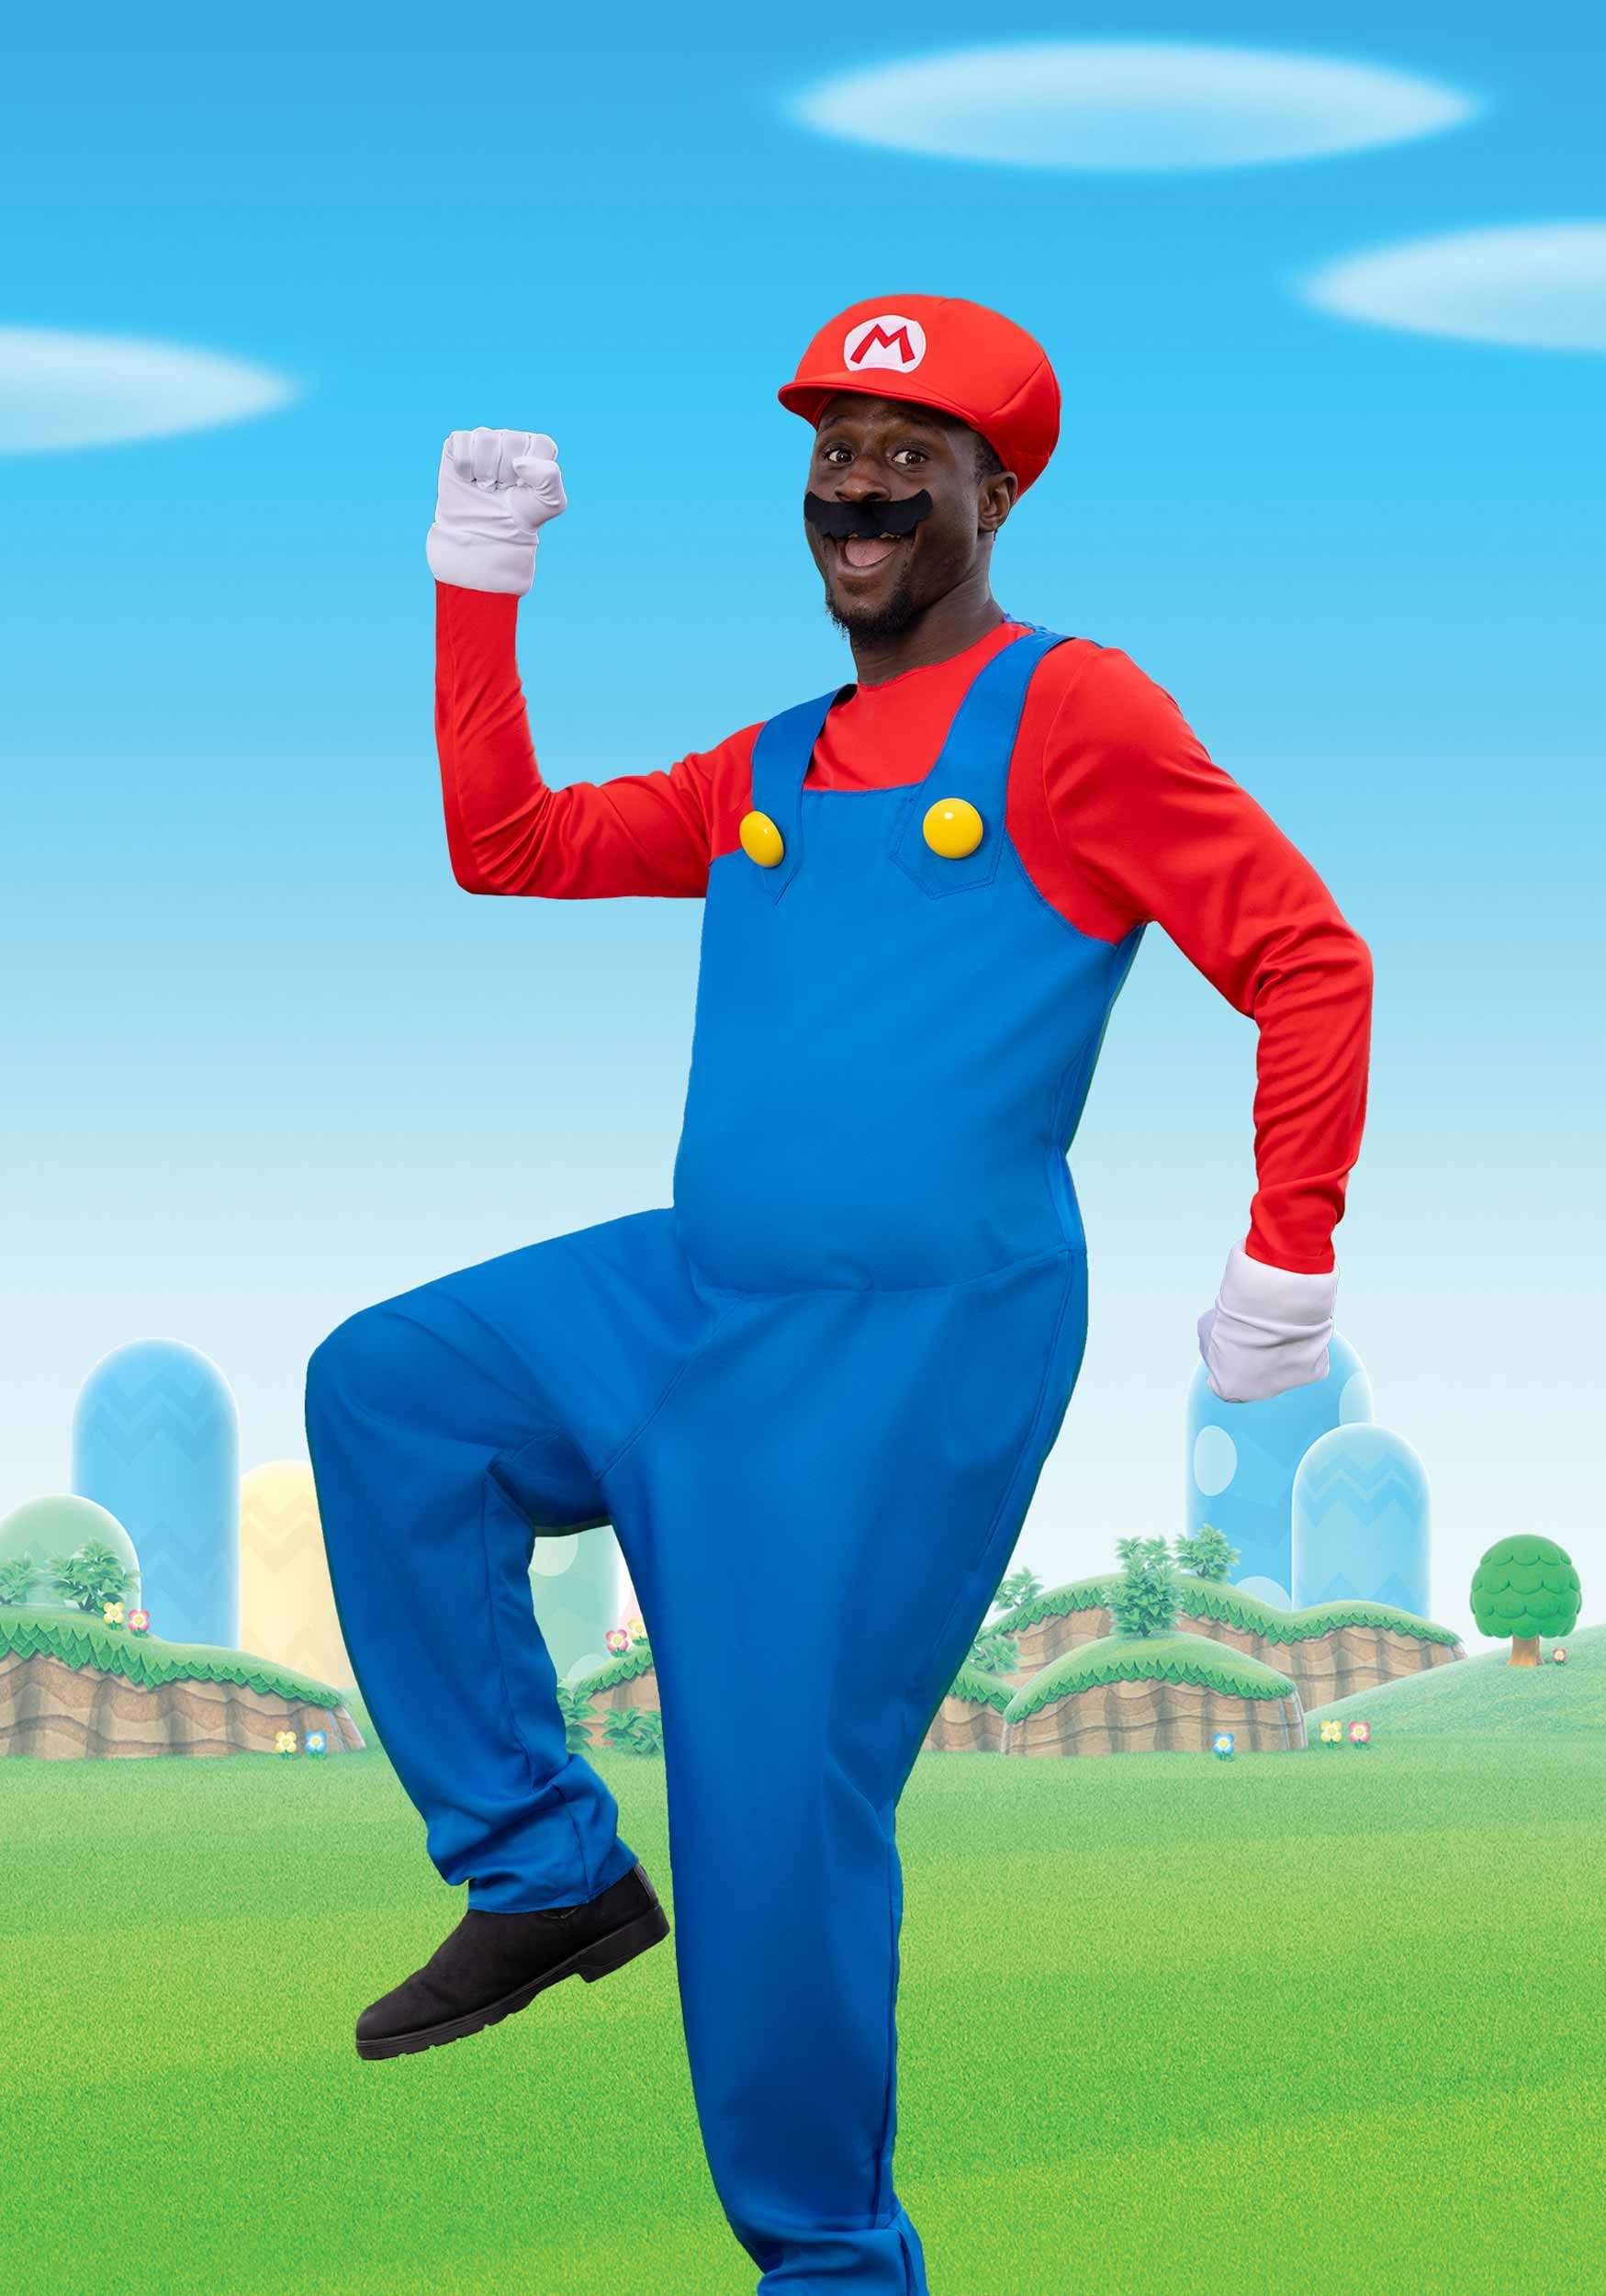 Nintendo Super Mario Brothers Men's Mario Deluxe Costume